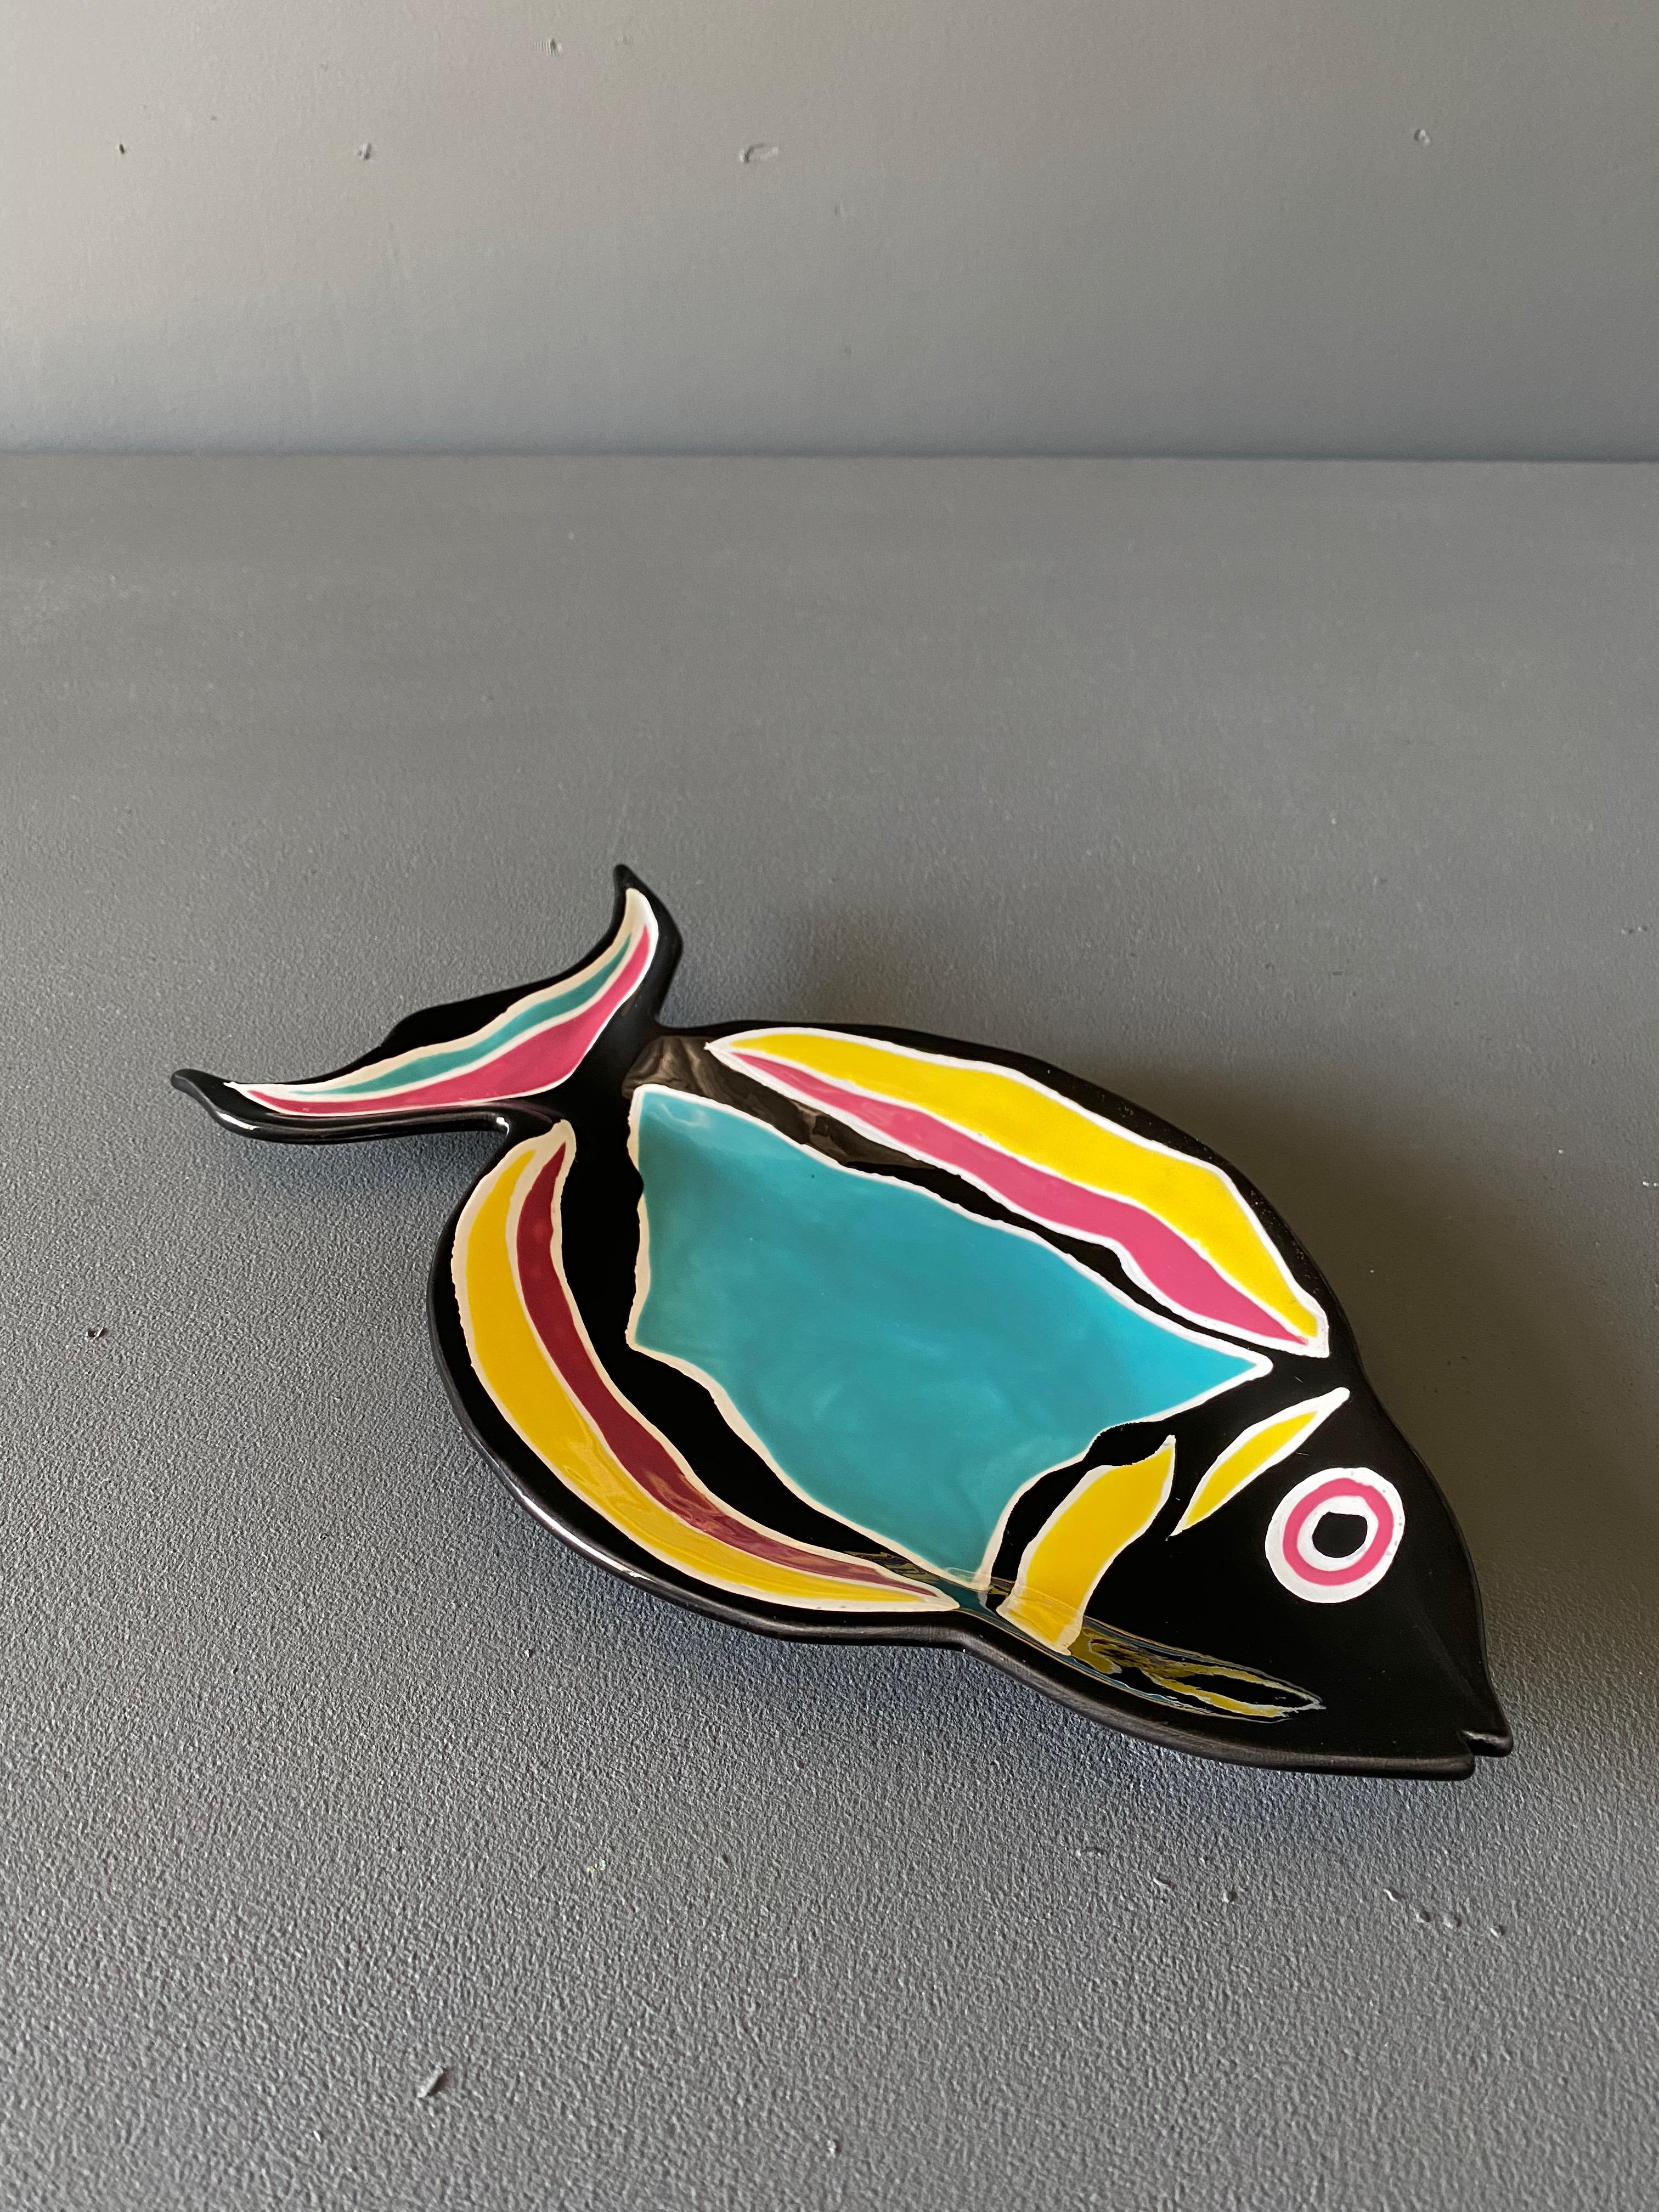 Dept 56 Decorative Fish Plate. Japan, circa 1985.